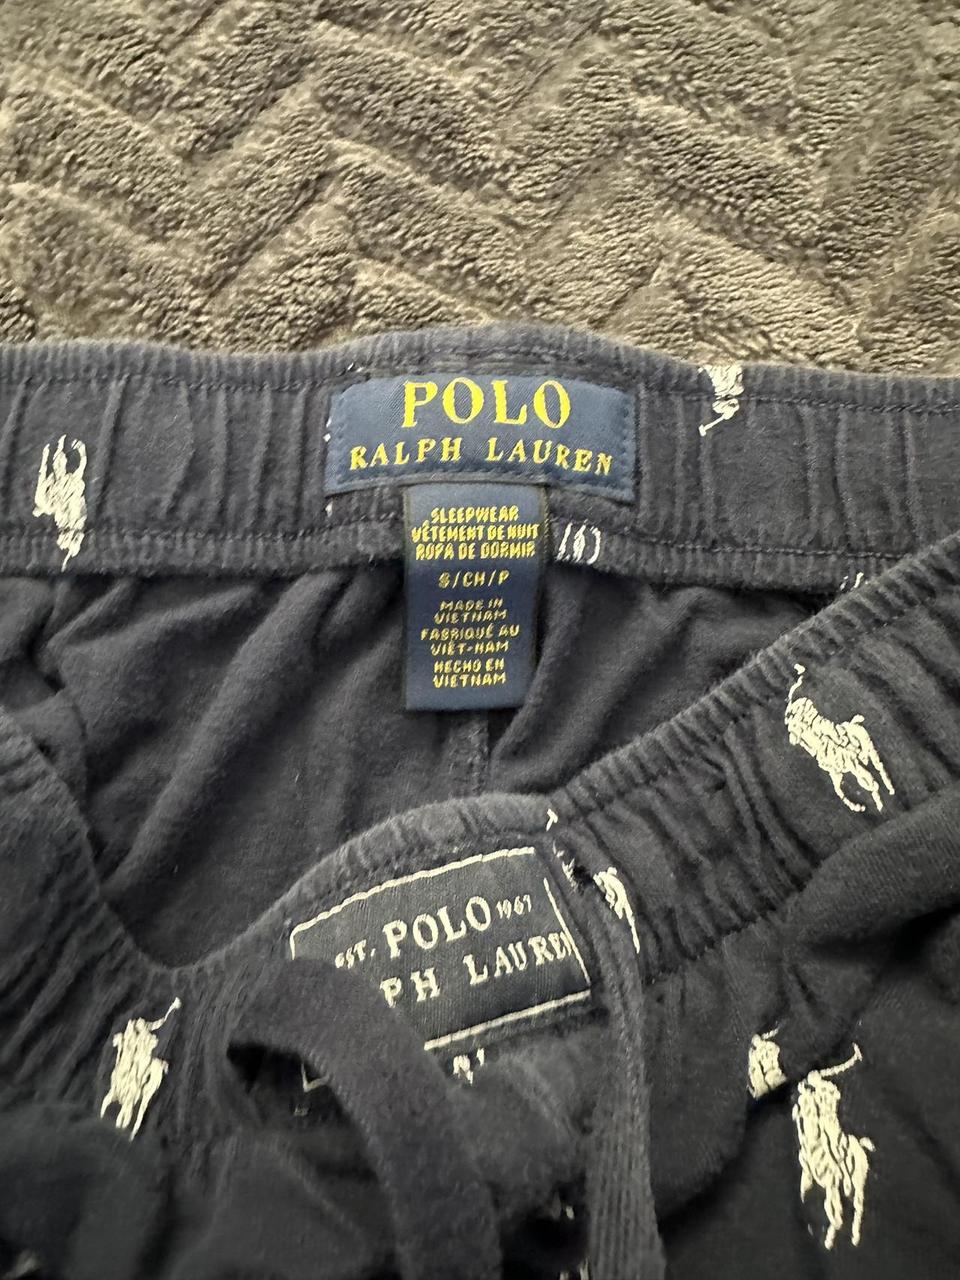 worn like 2 times size small polo pants - Depop